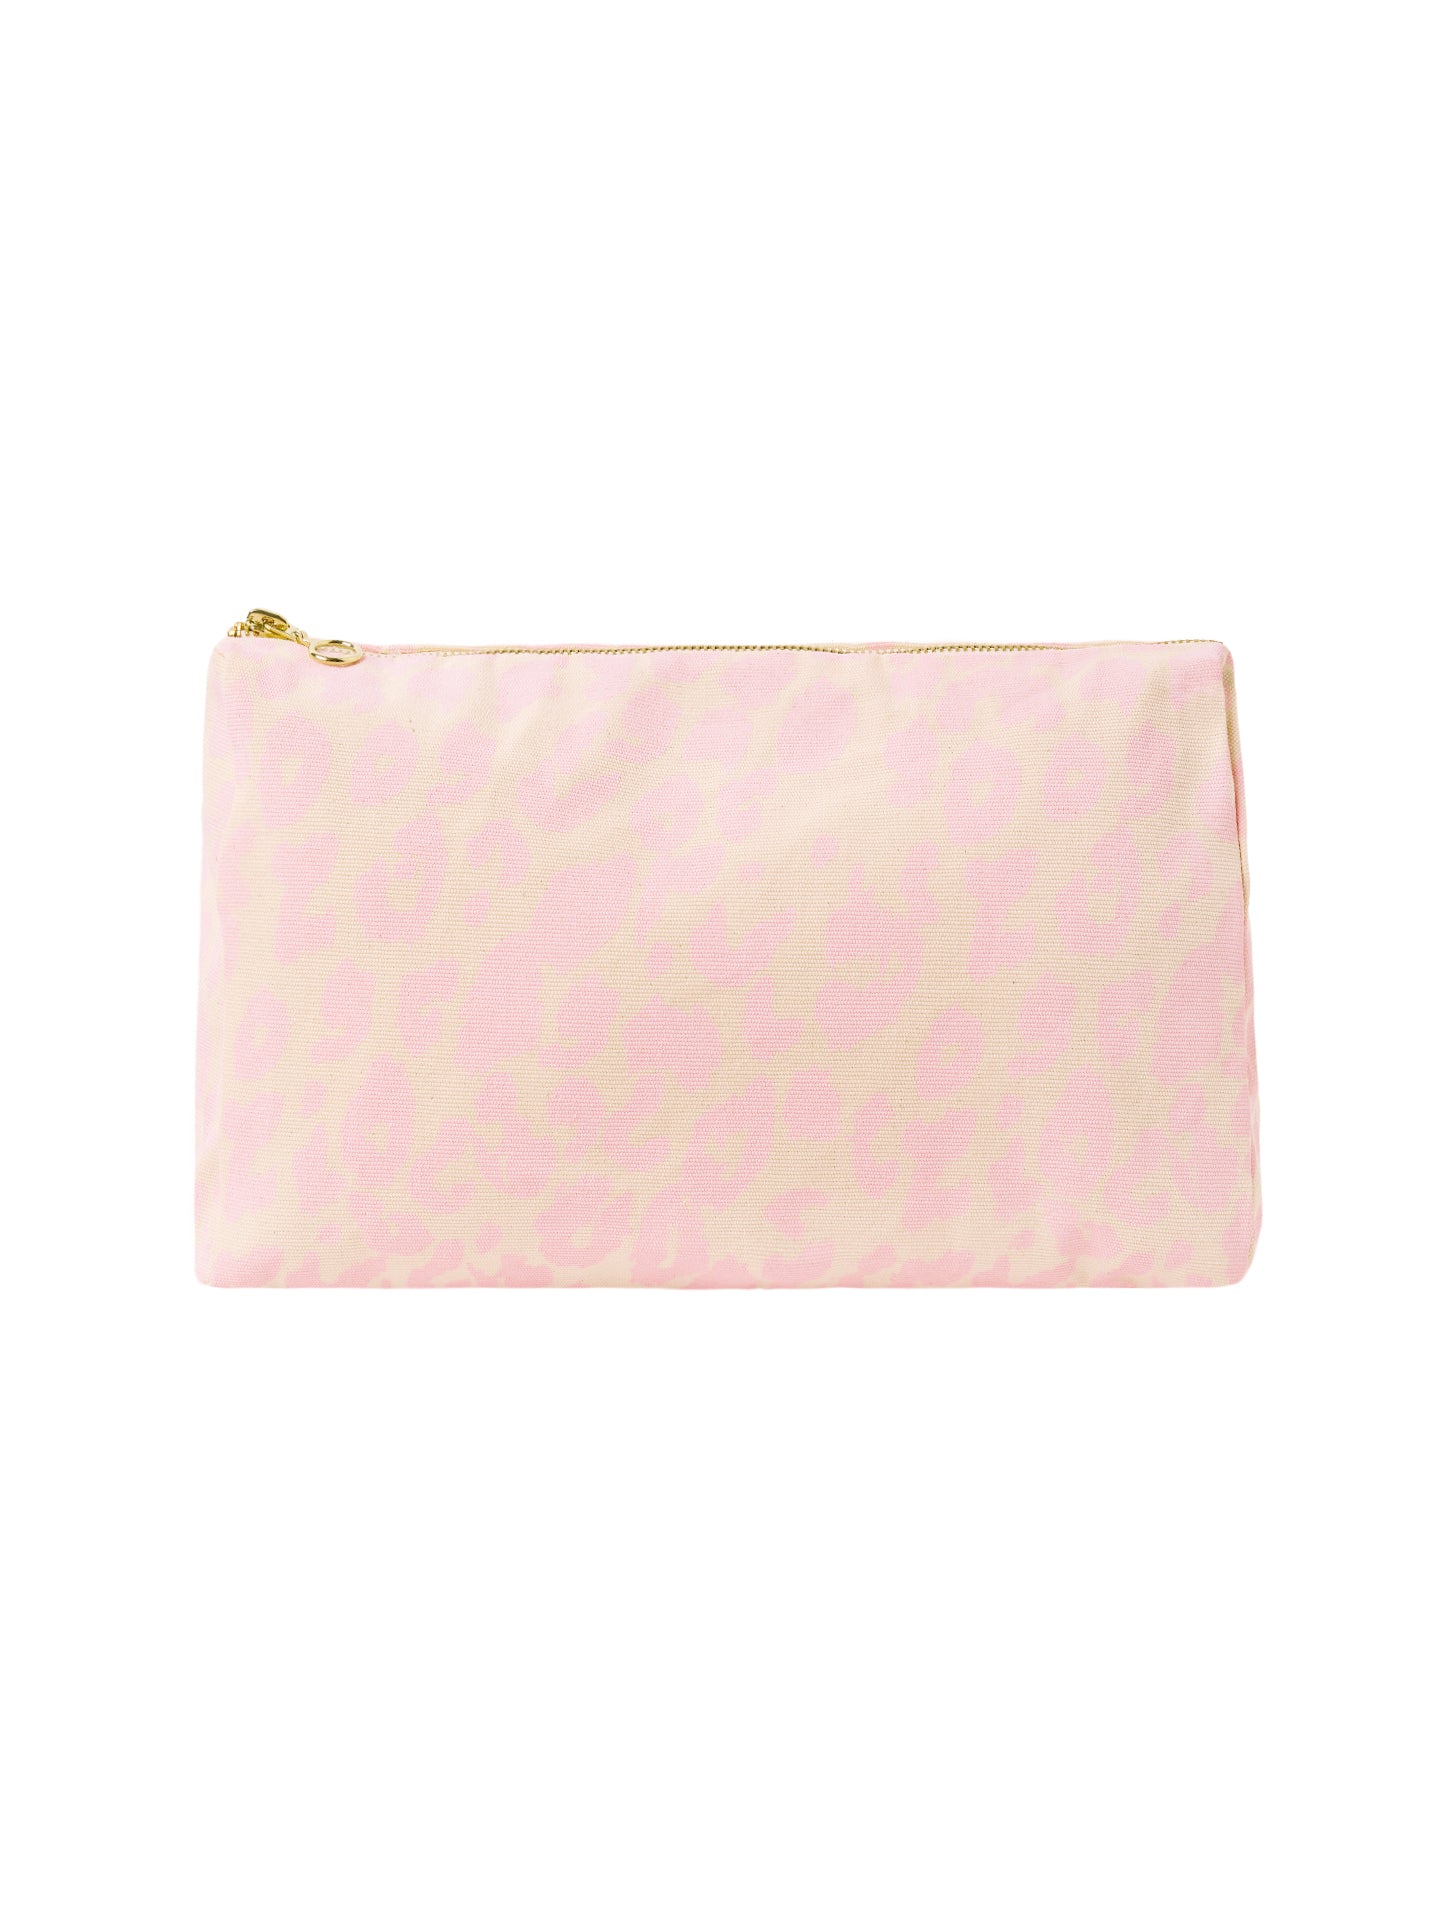 Leo Cosmetic Bag Large - pastel pink/cream